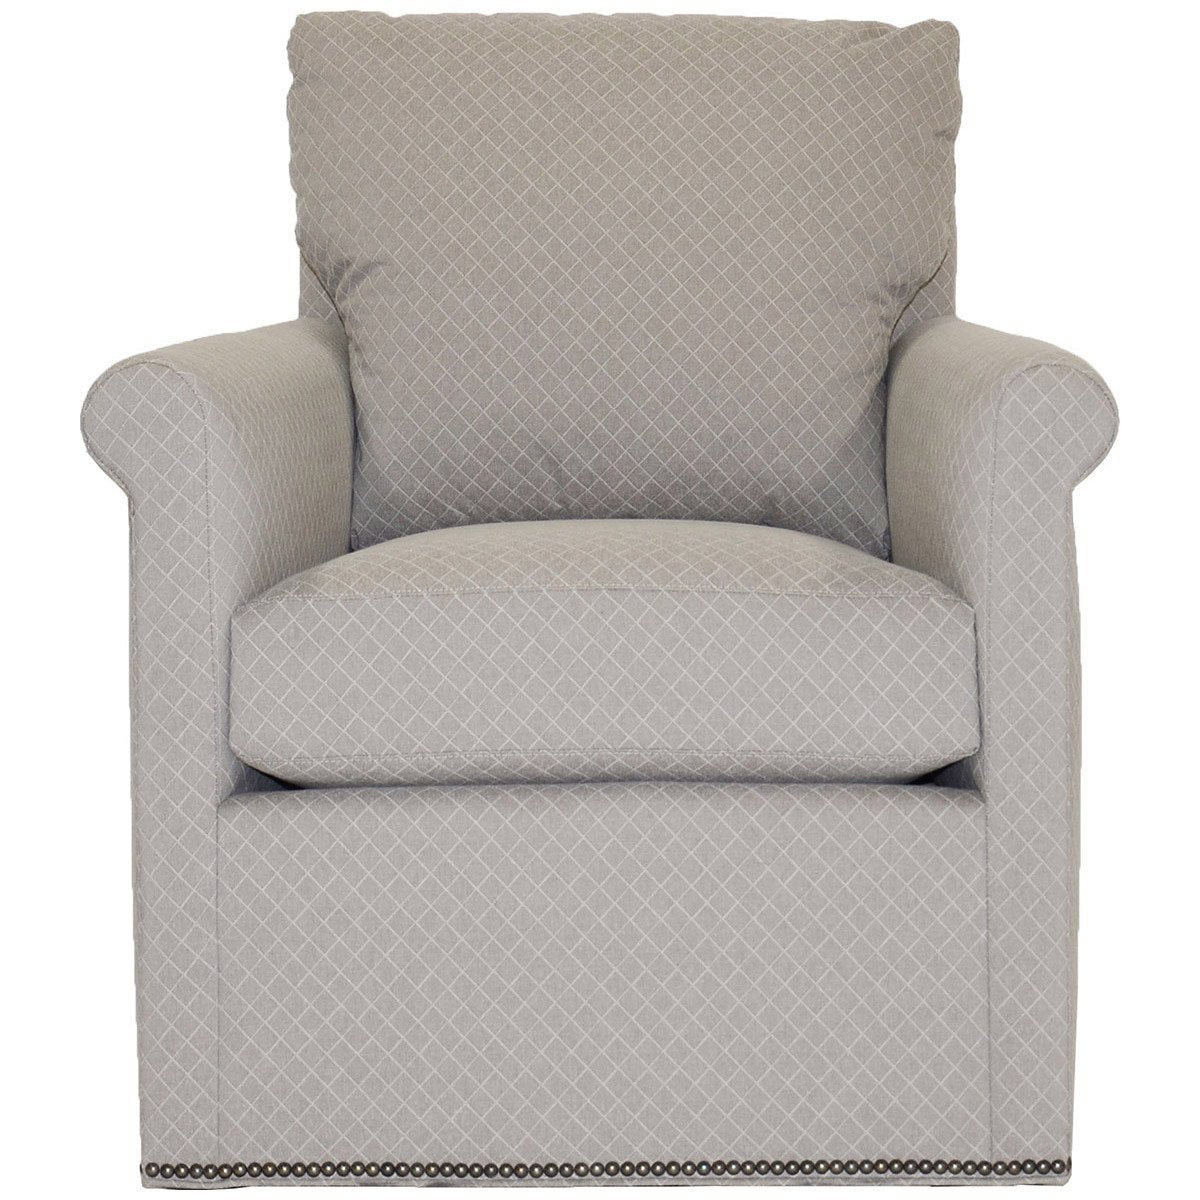 Vanguard Furniture Jordan Ash Gwynn Swivel Chair